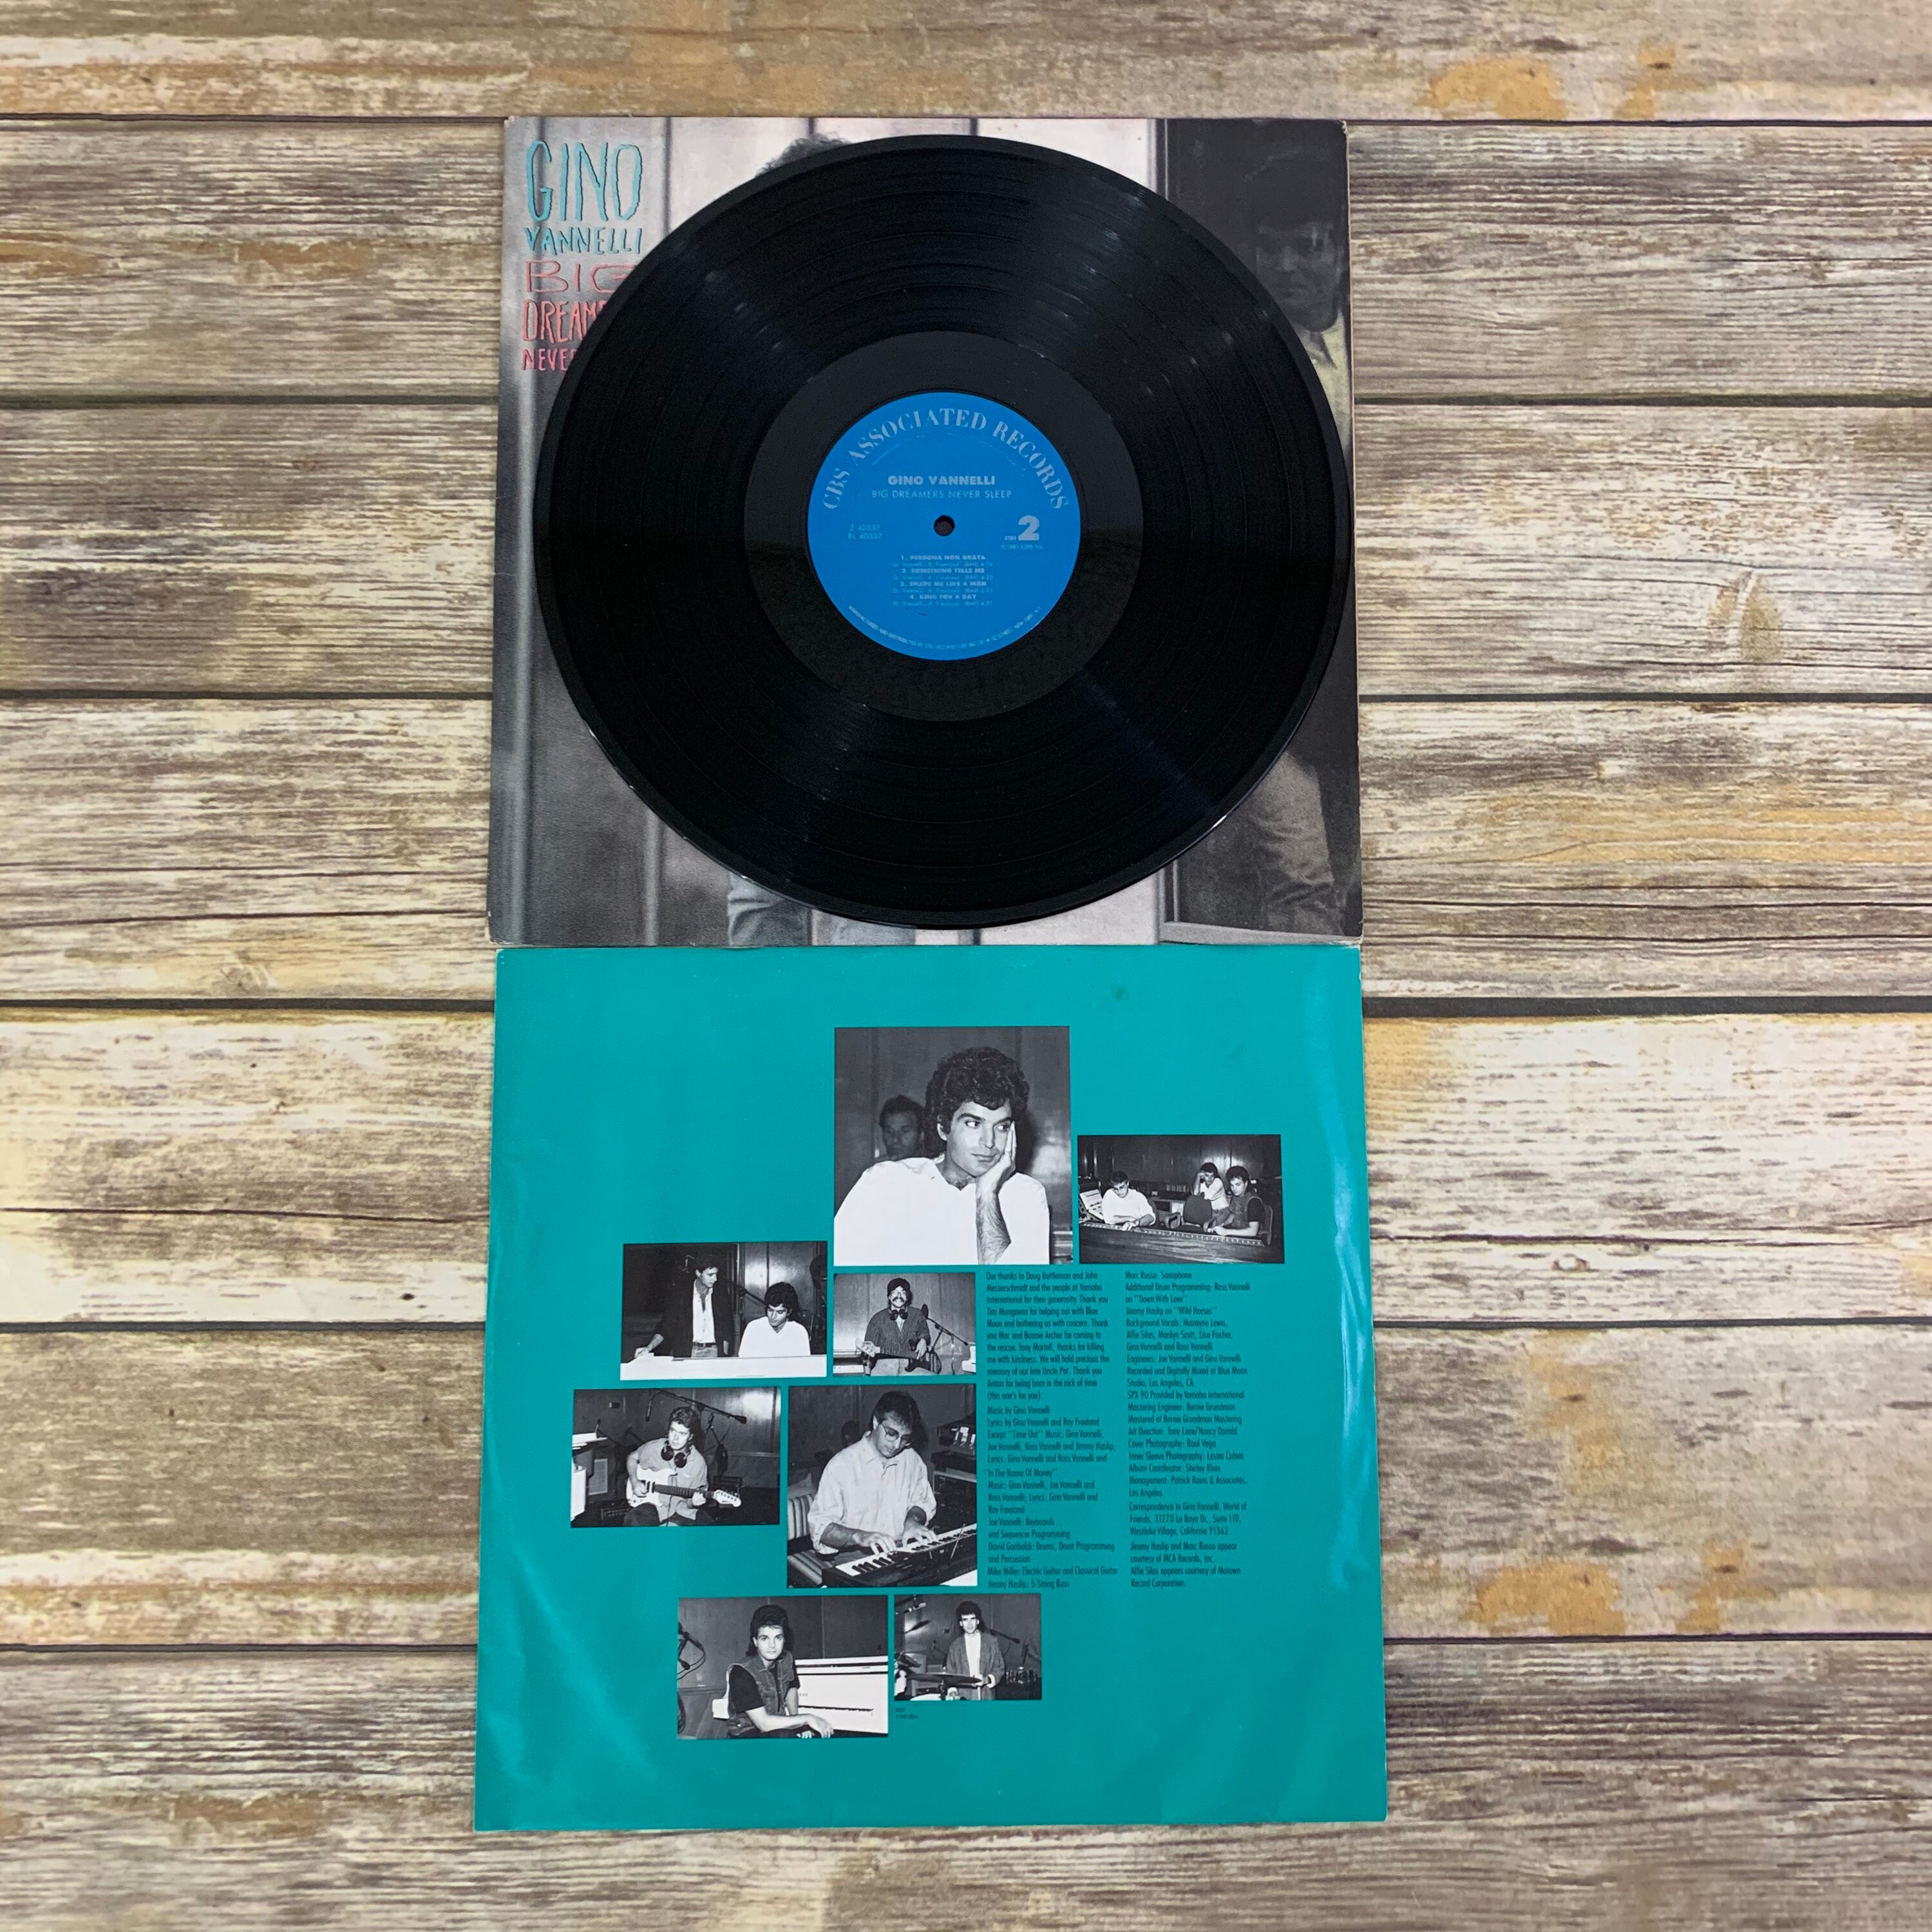 Gino vanelli big dreamers never sleep 1987 vintage vinyl | Etsy